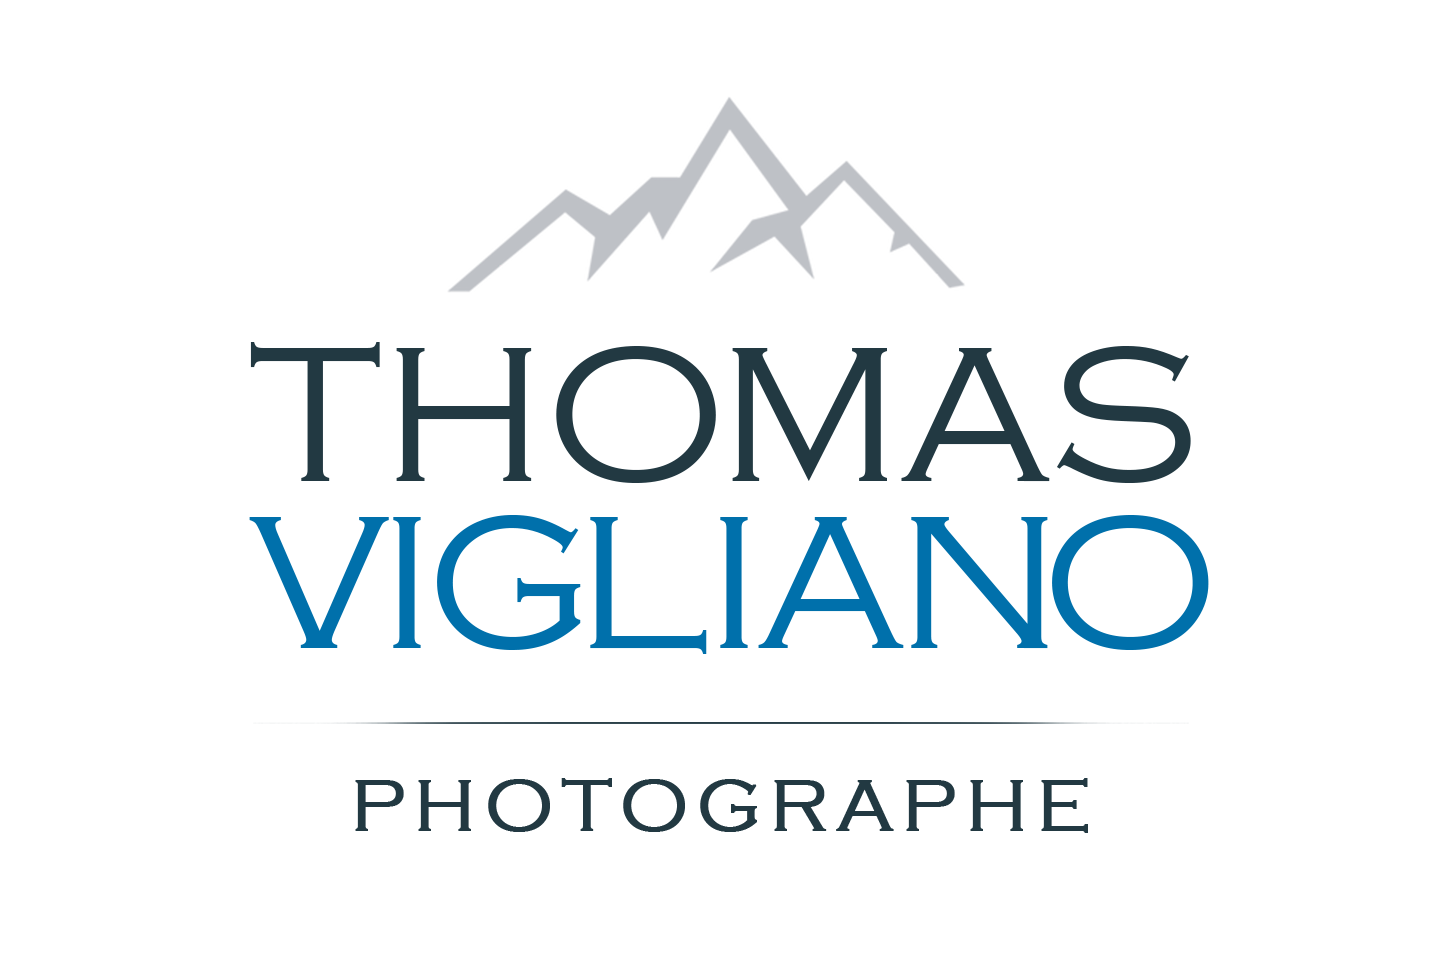 THOMAS VIGLIANO PHOTOGRAPHE